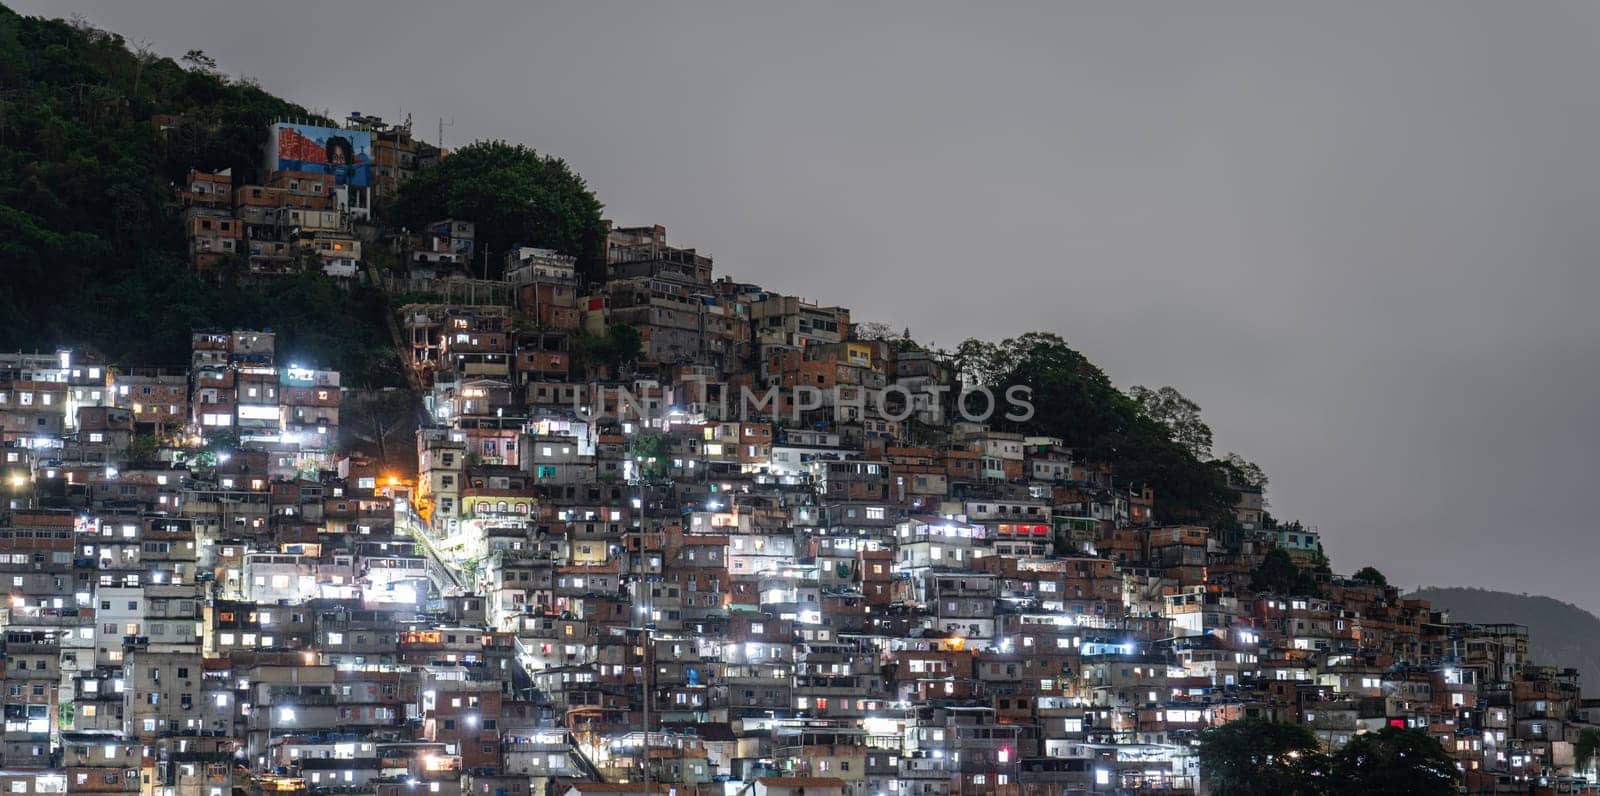 Hillside Favela in Brazil Illuminated at Nighttime by FerradalFCG